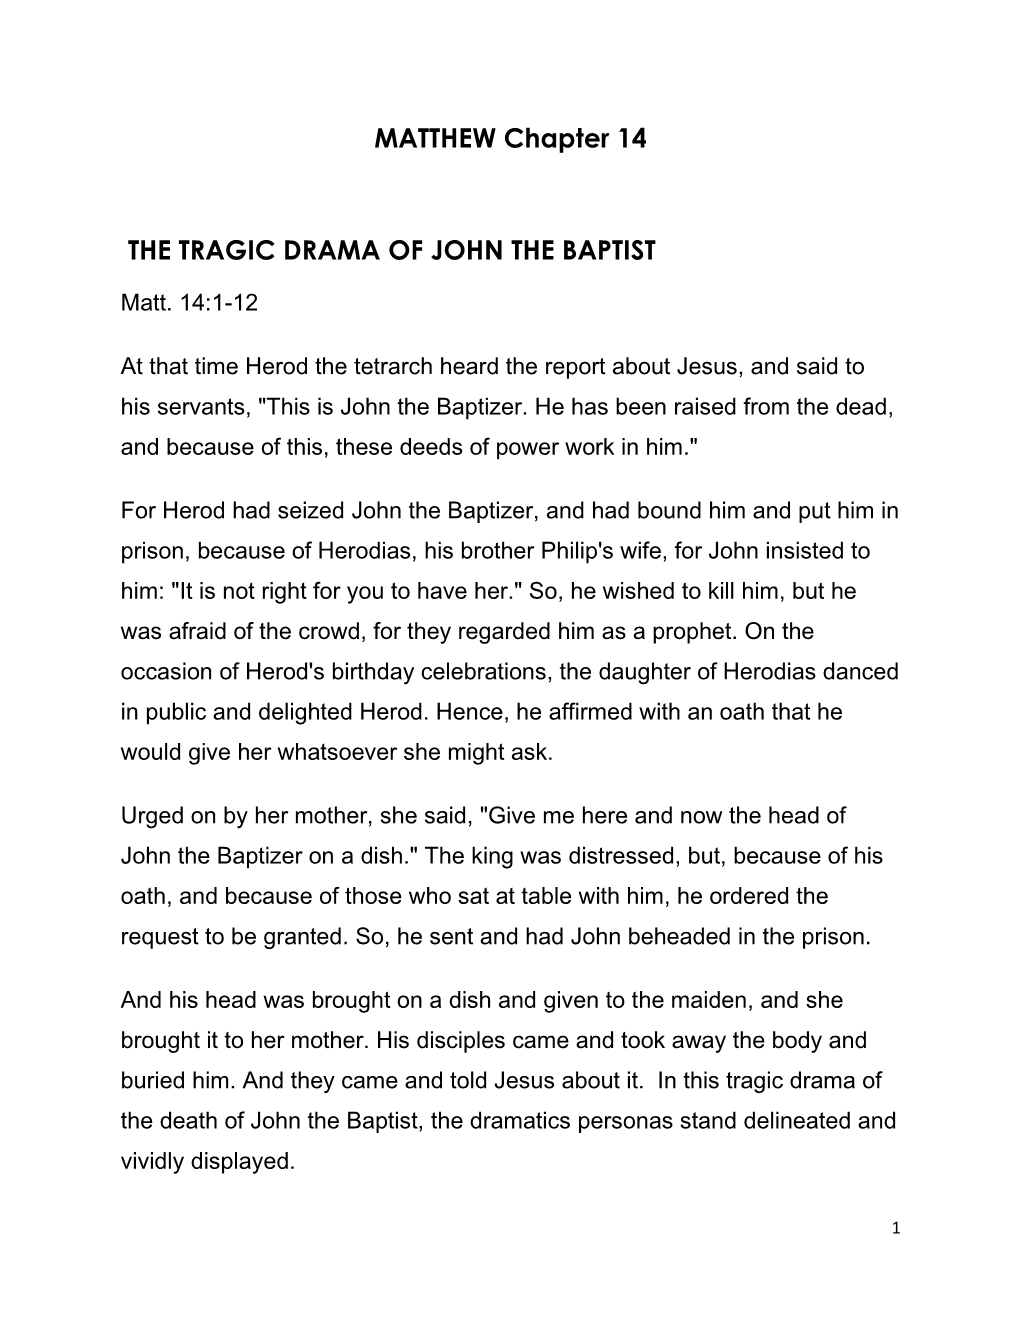 MATTHEW Chapter 14 the TRAGIC DRAMA of JOHN the BAPTIST